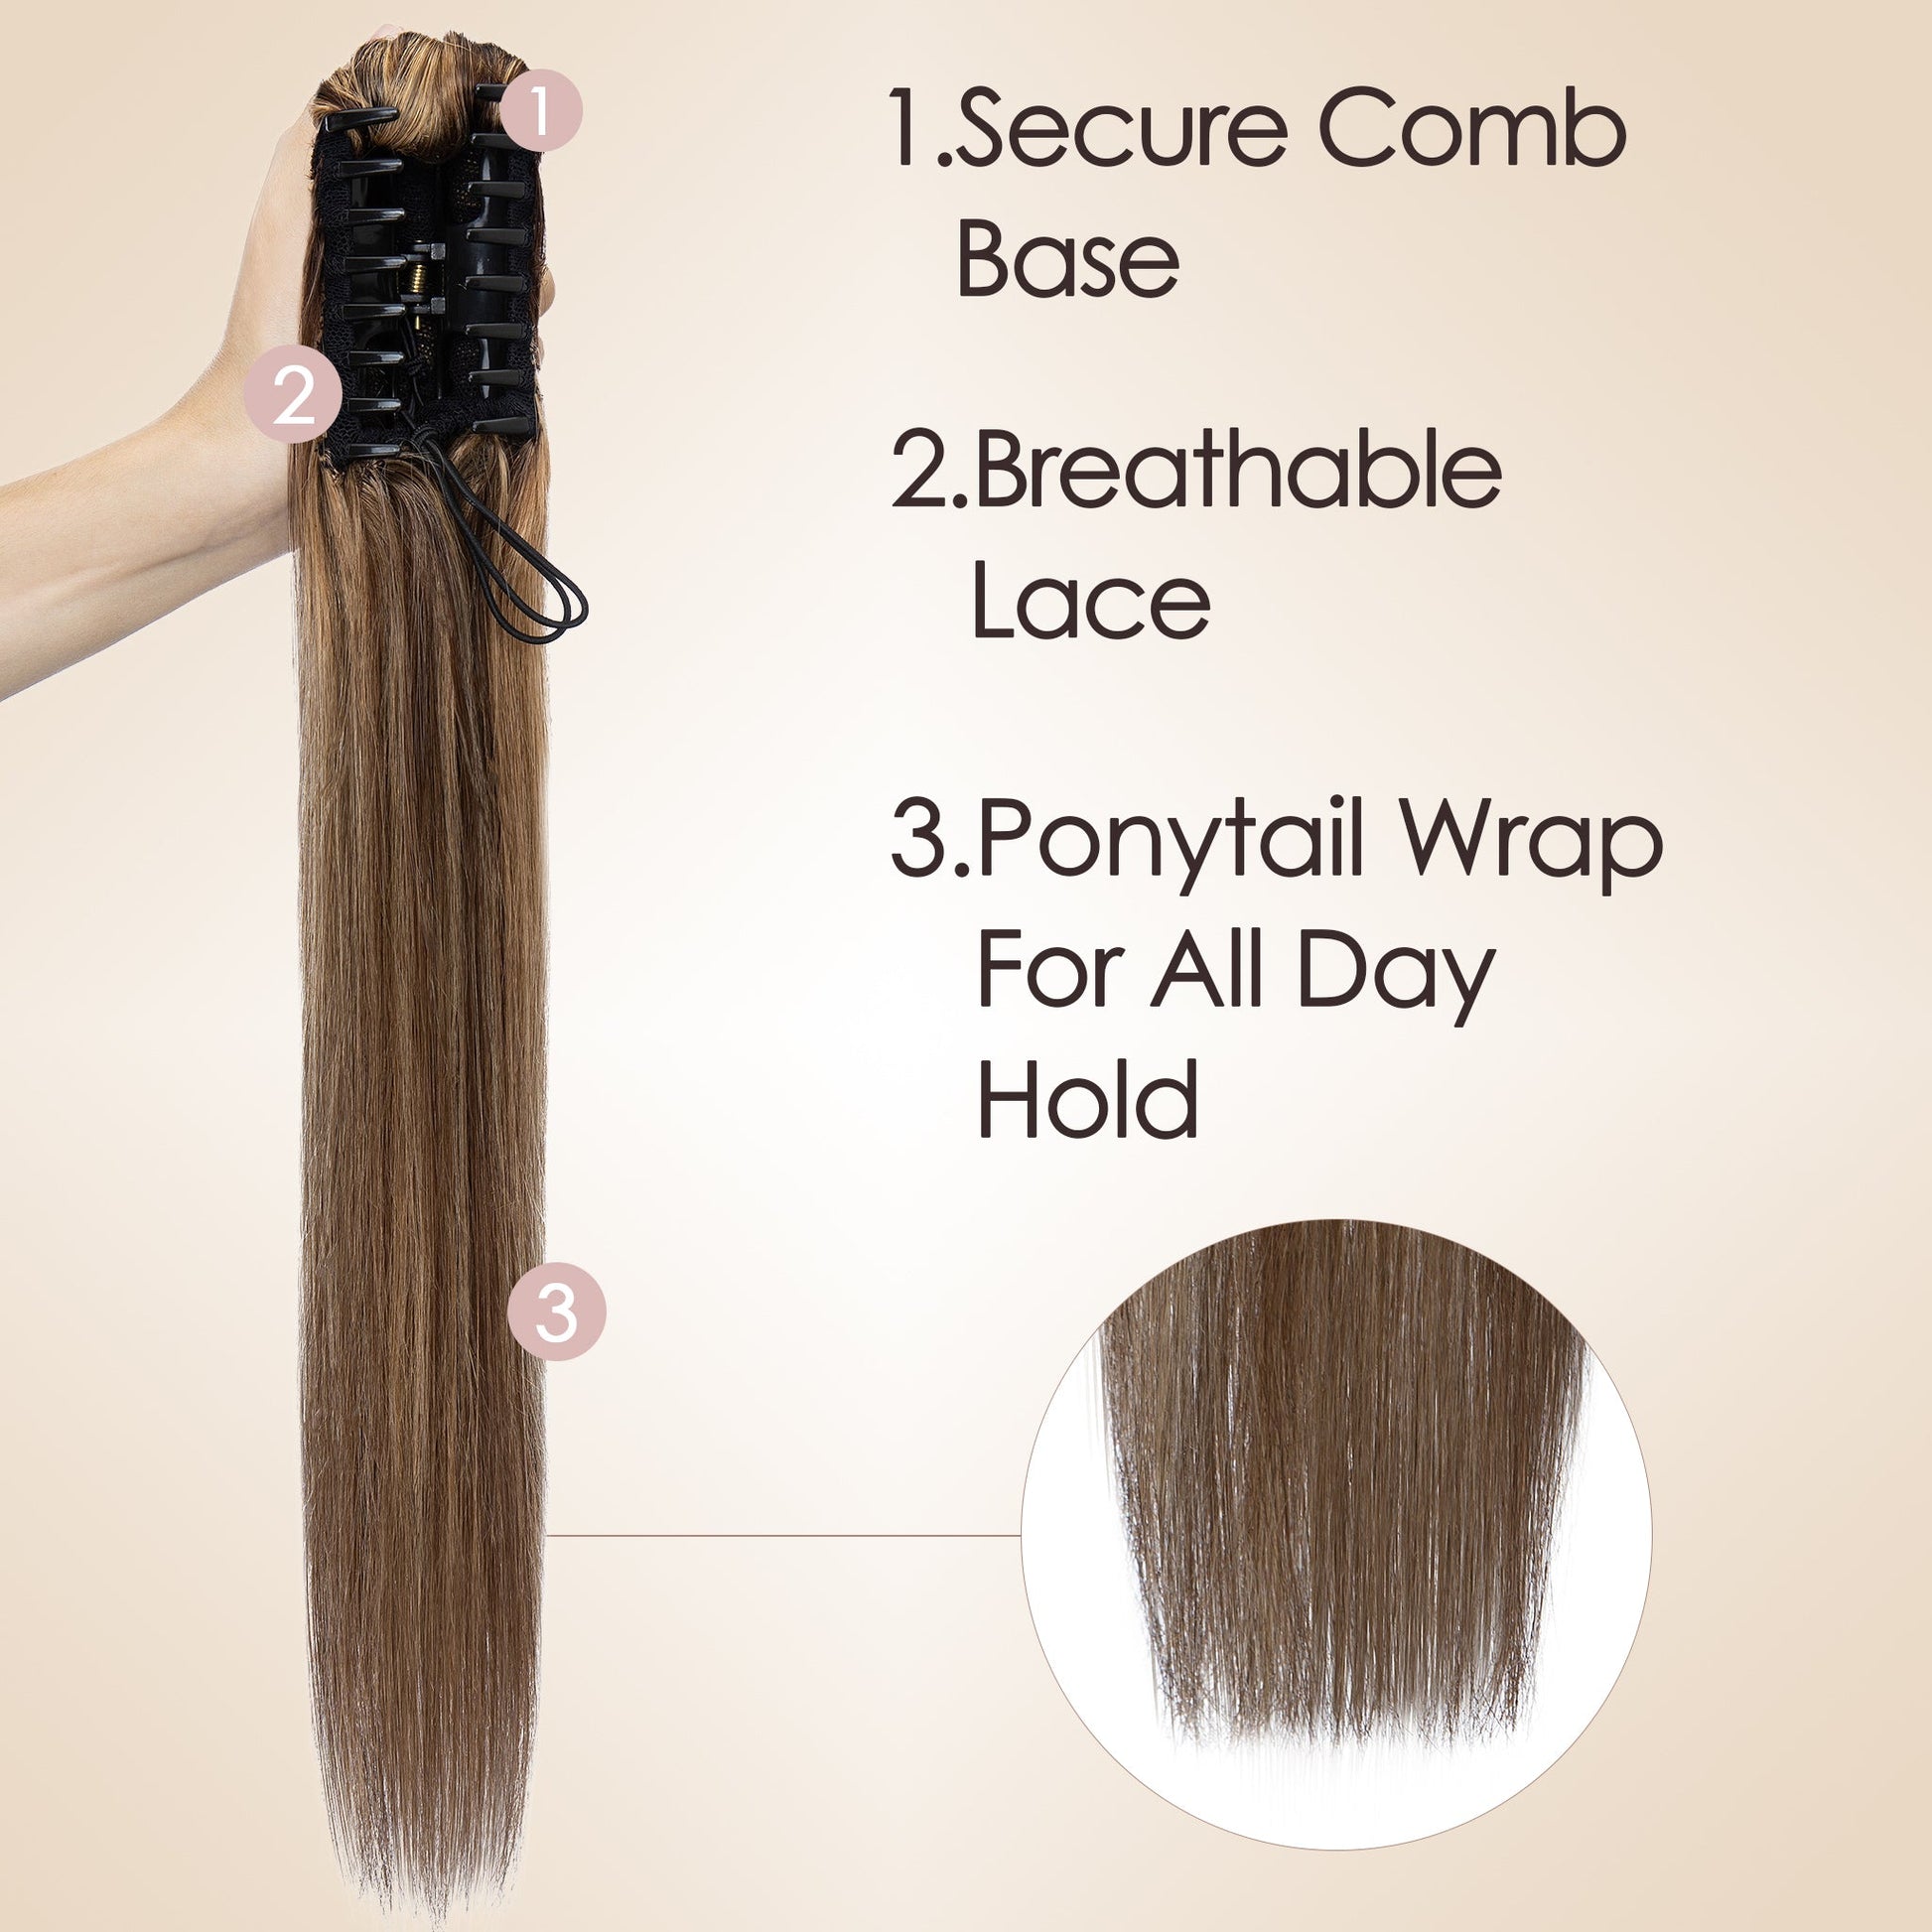 Medium Brown Blonde Claw Clip Ponytail Extension segohair.com